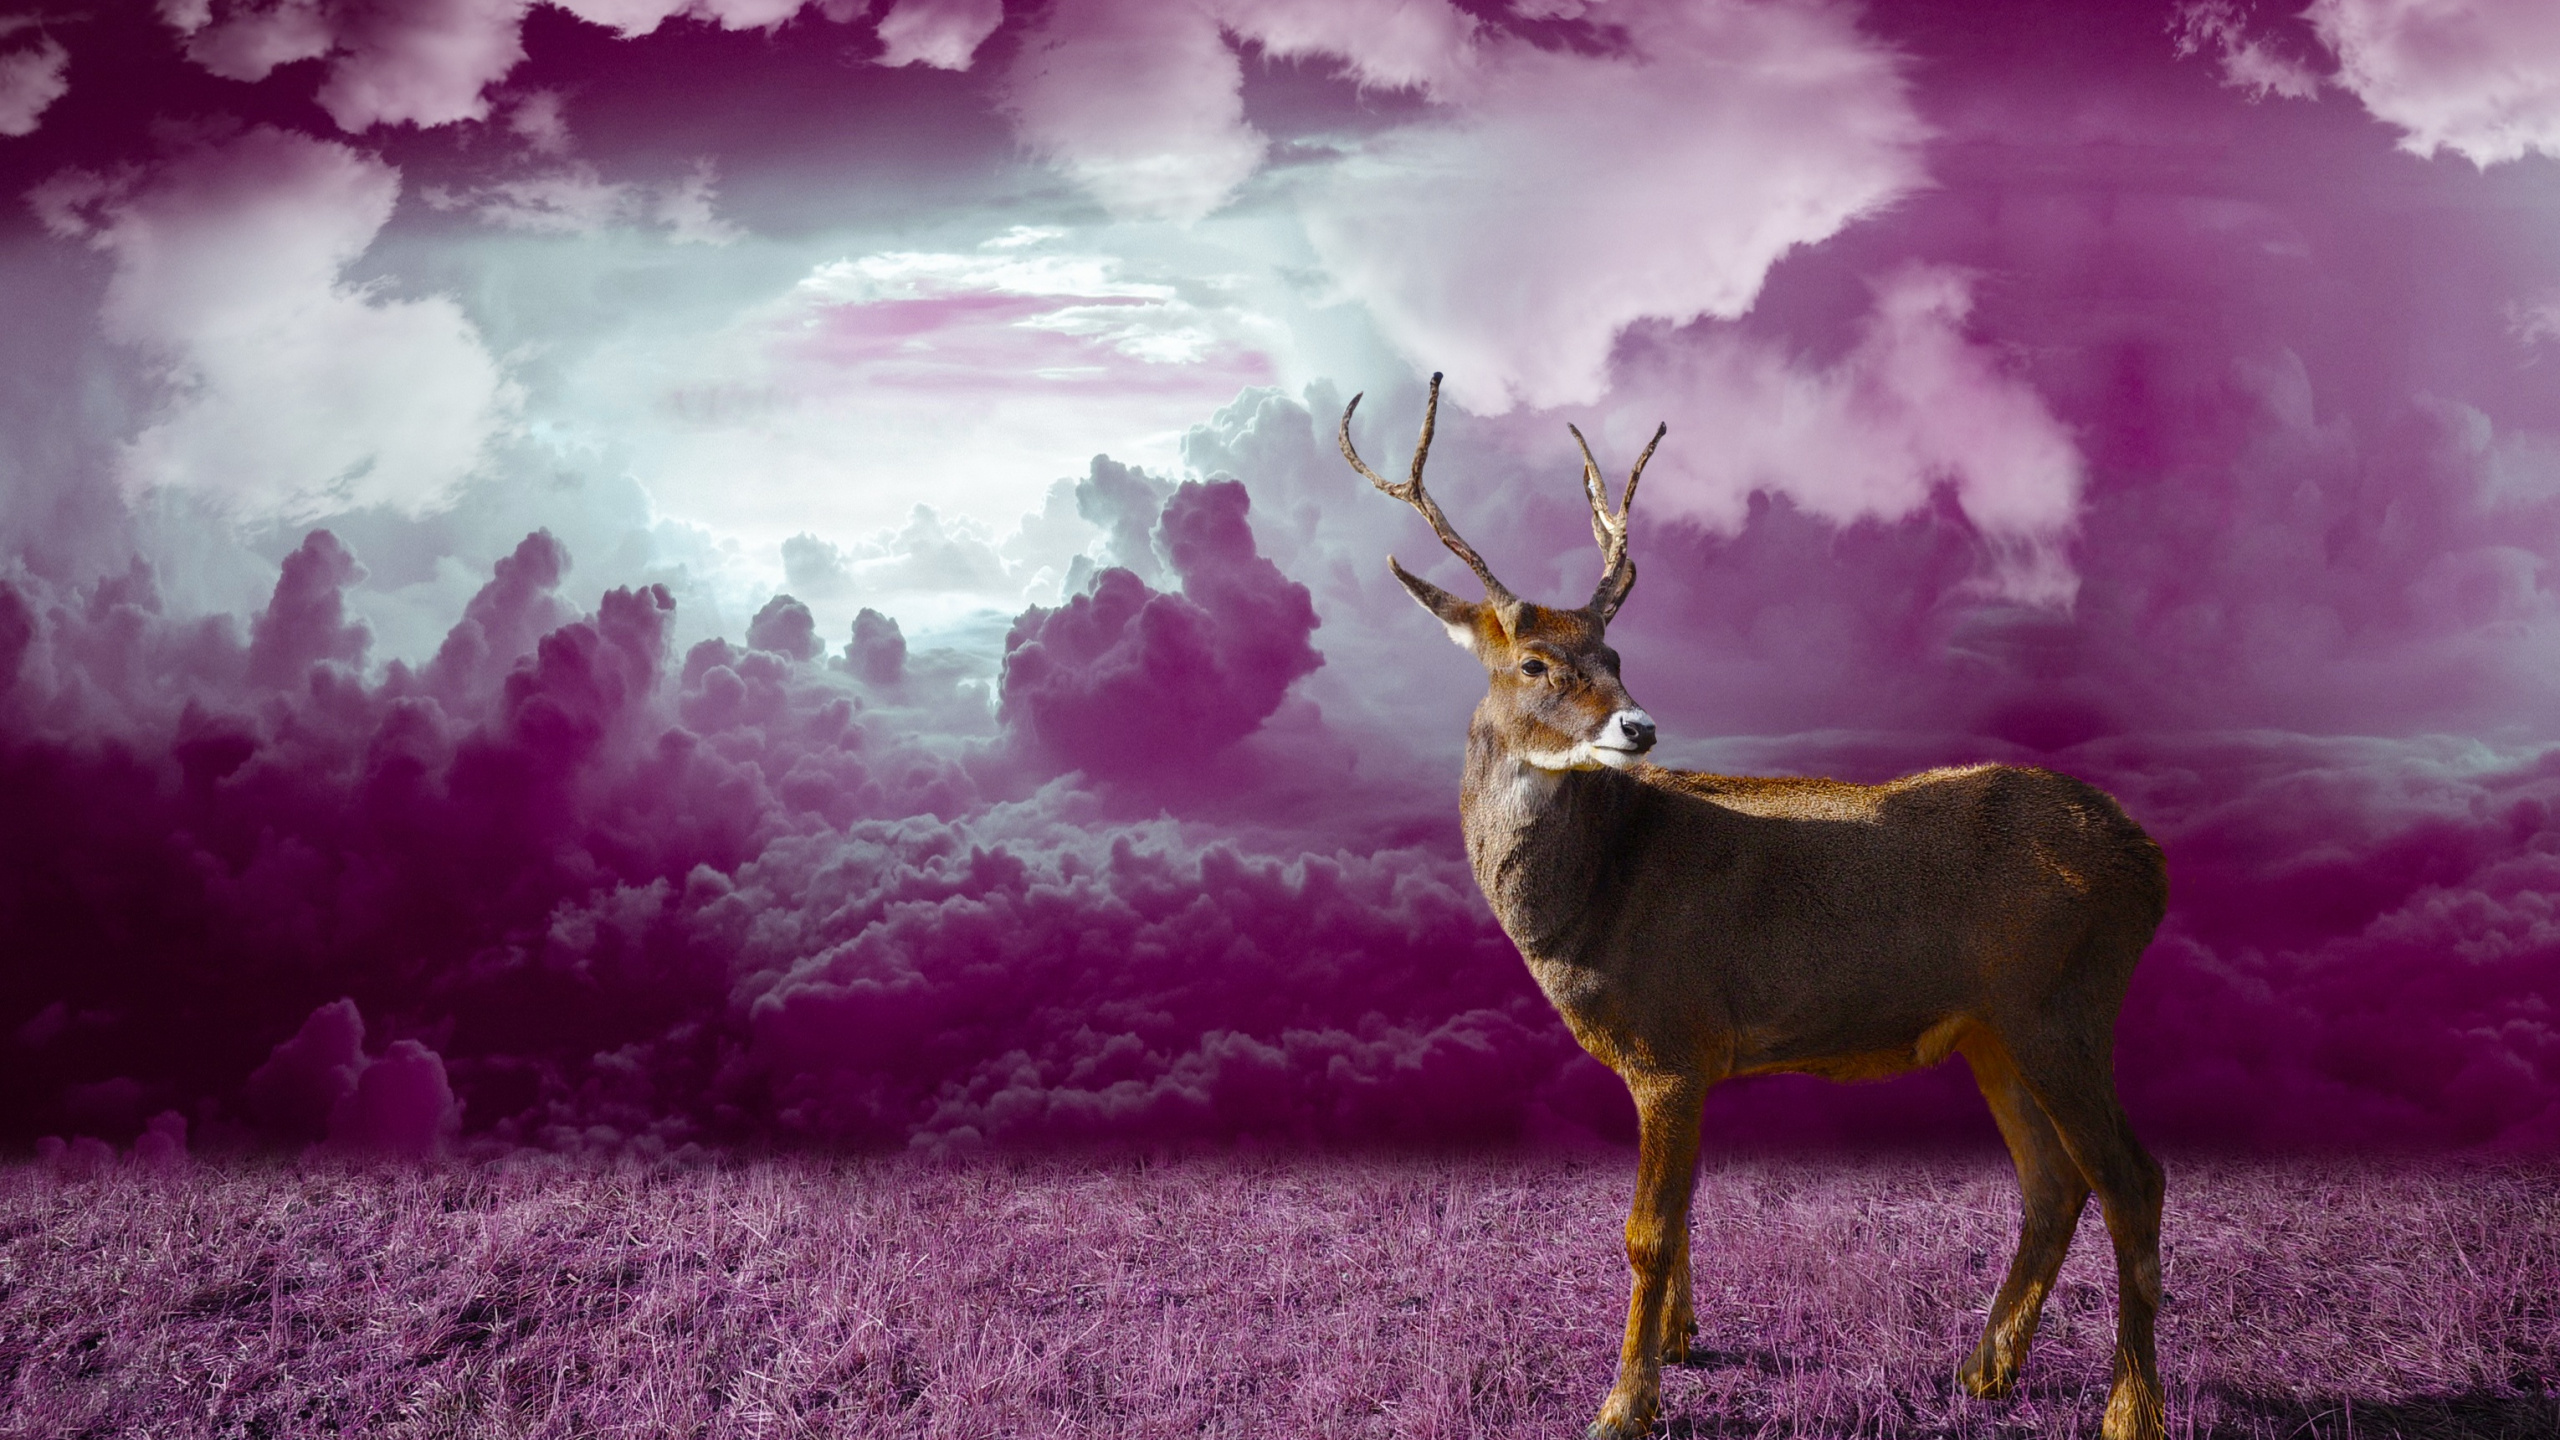 Brown Deer on Brown Grass Field Under Cloudy Sky. Wallpaper in 2560x1440 Resolution